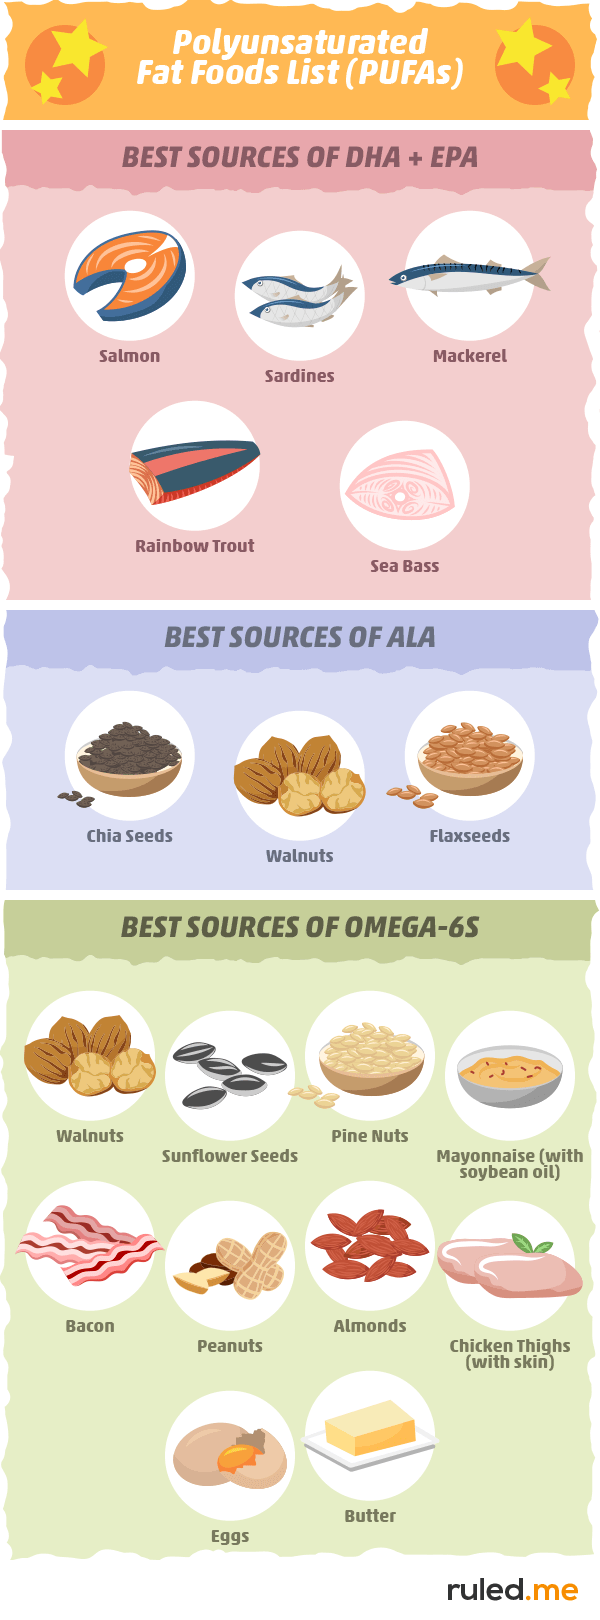 PUFA fatty acids sources of food